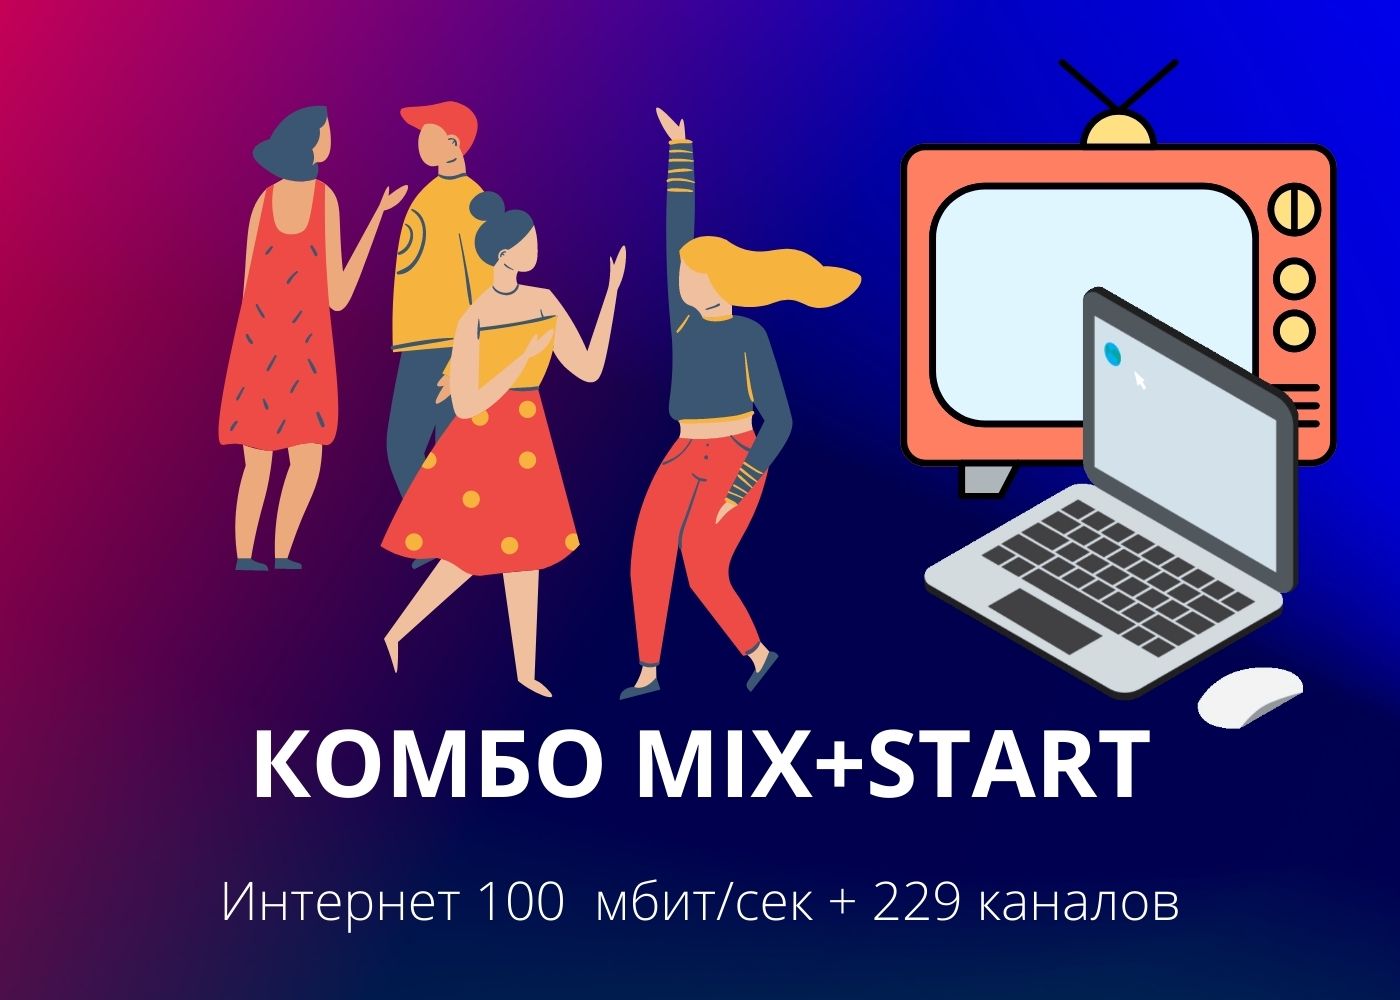 ПАКЕТ "КОМБО MIX" + START